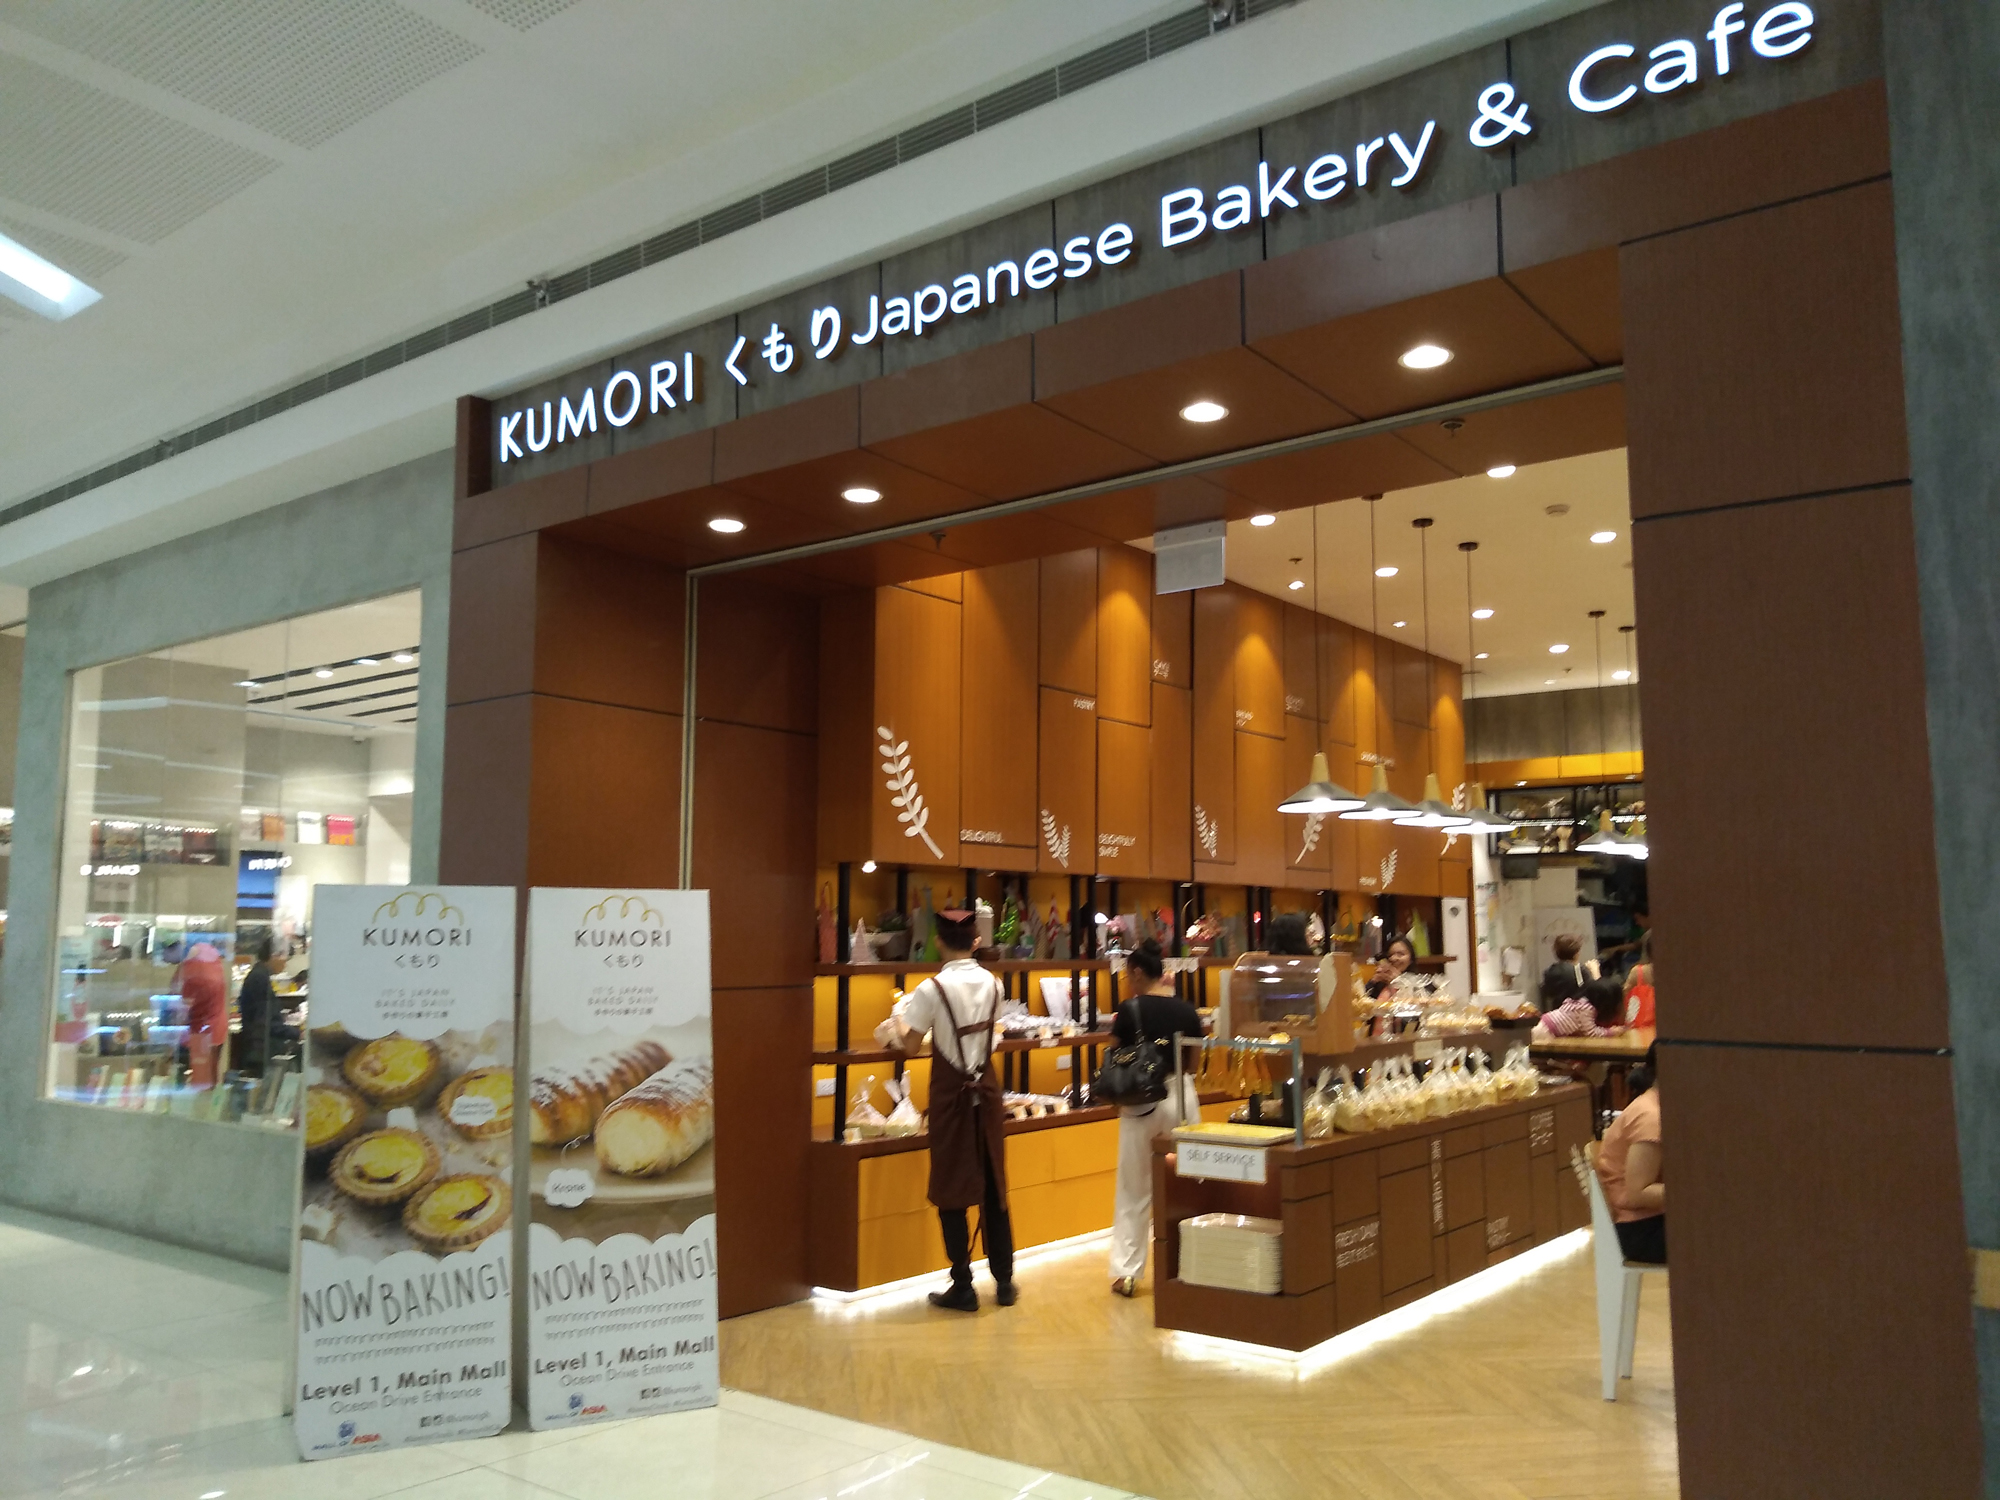 Kumori Japanese Bakery & Cafe - Pasay